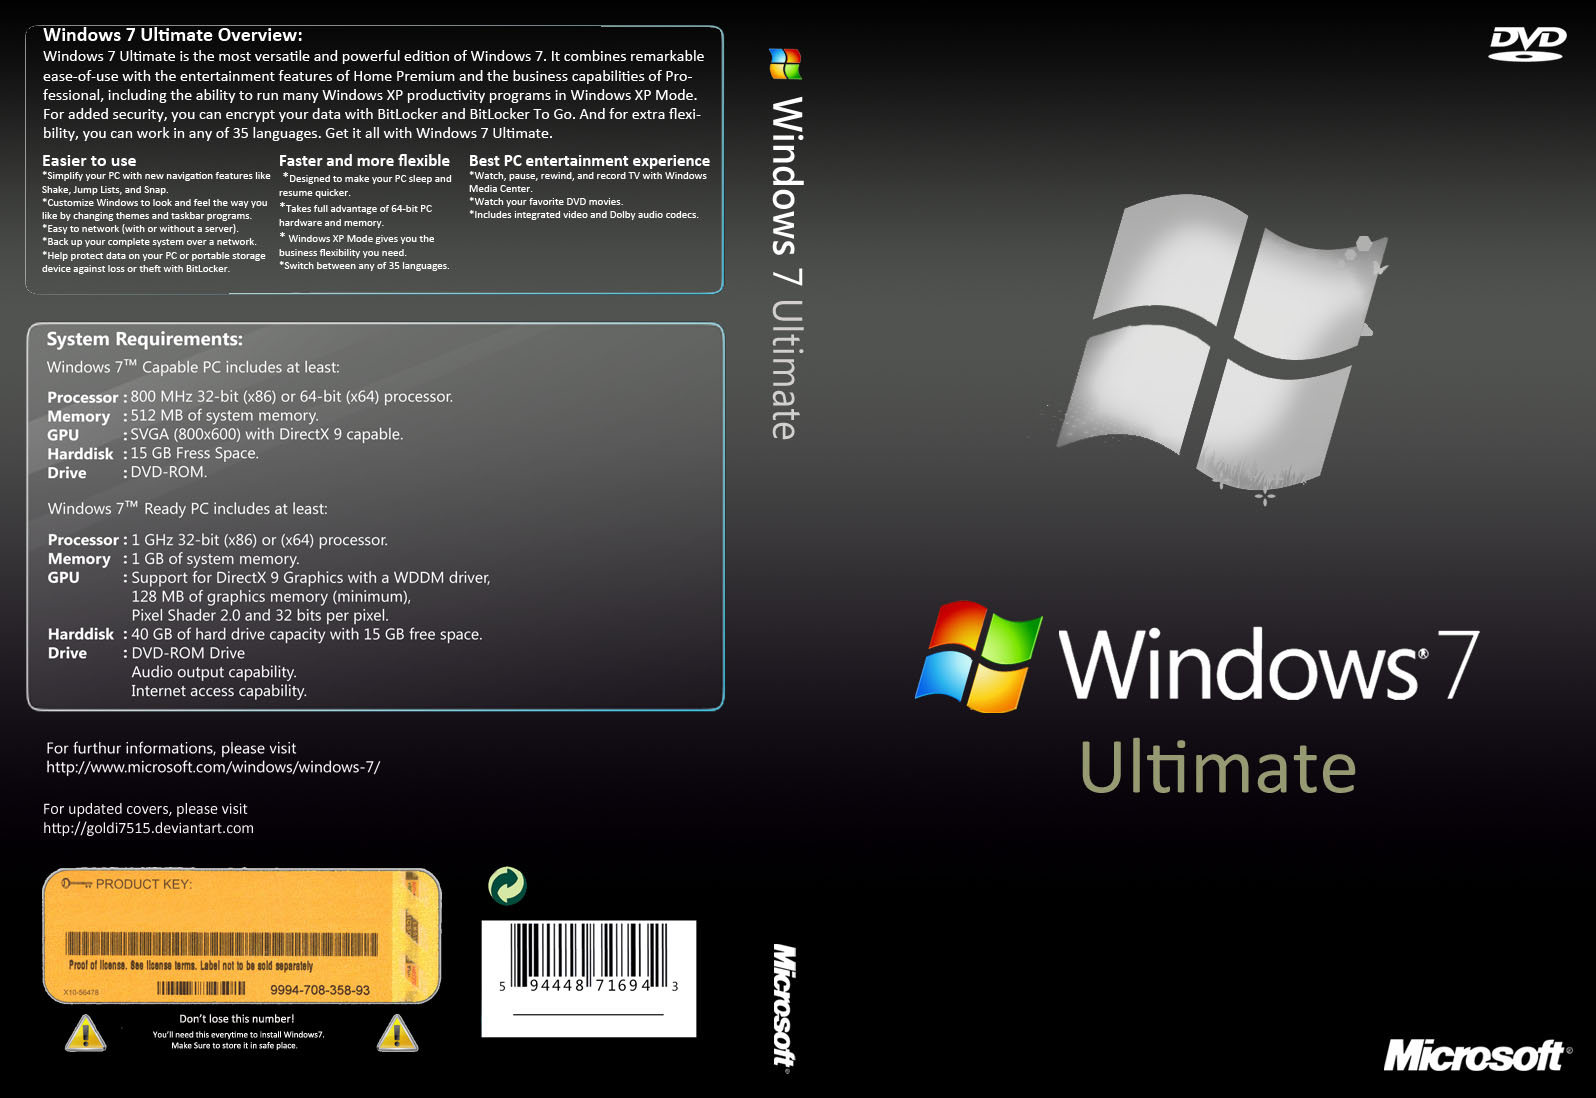 windows 7 ultimate 64 bit download image file